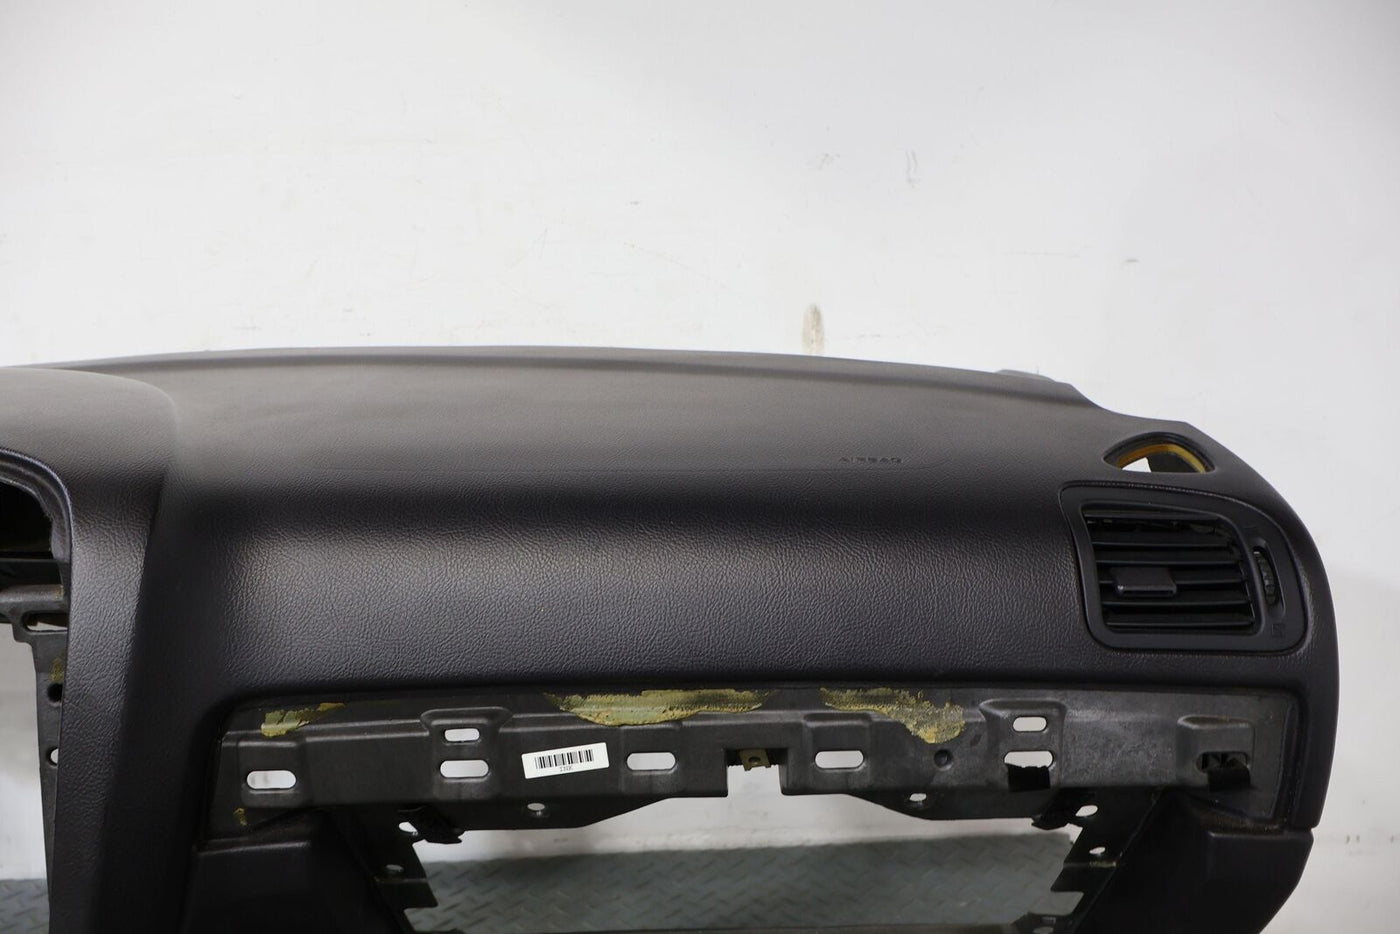 02-05 Ford Thunderbird OEM Bare Interior Dash Dashboard (Black BW) Mild Wear